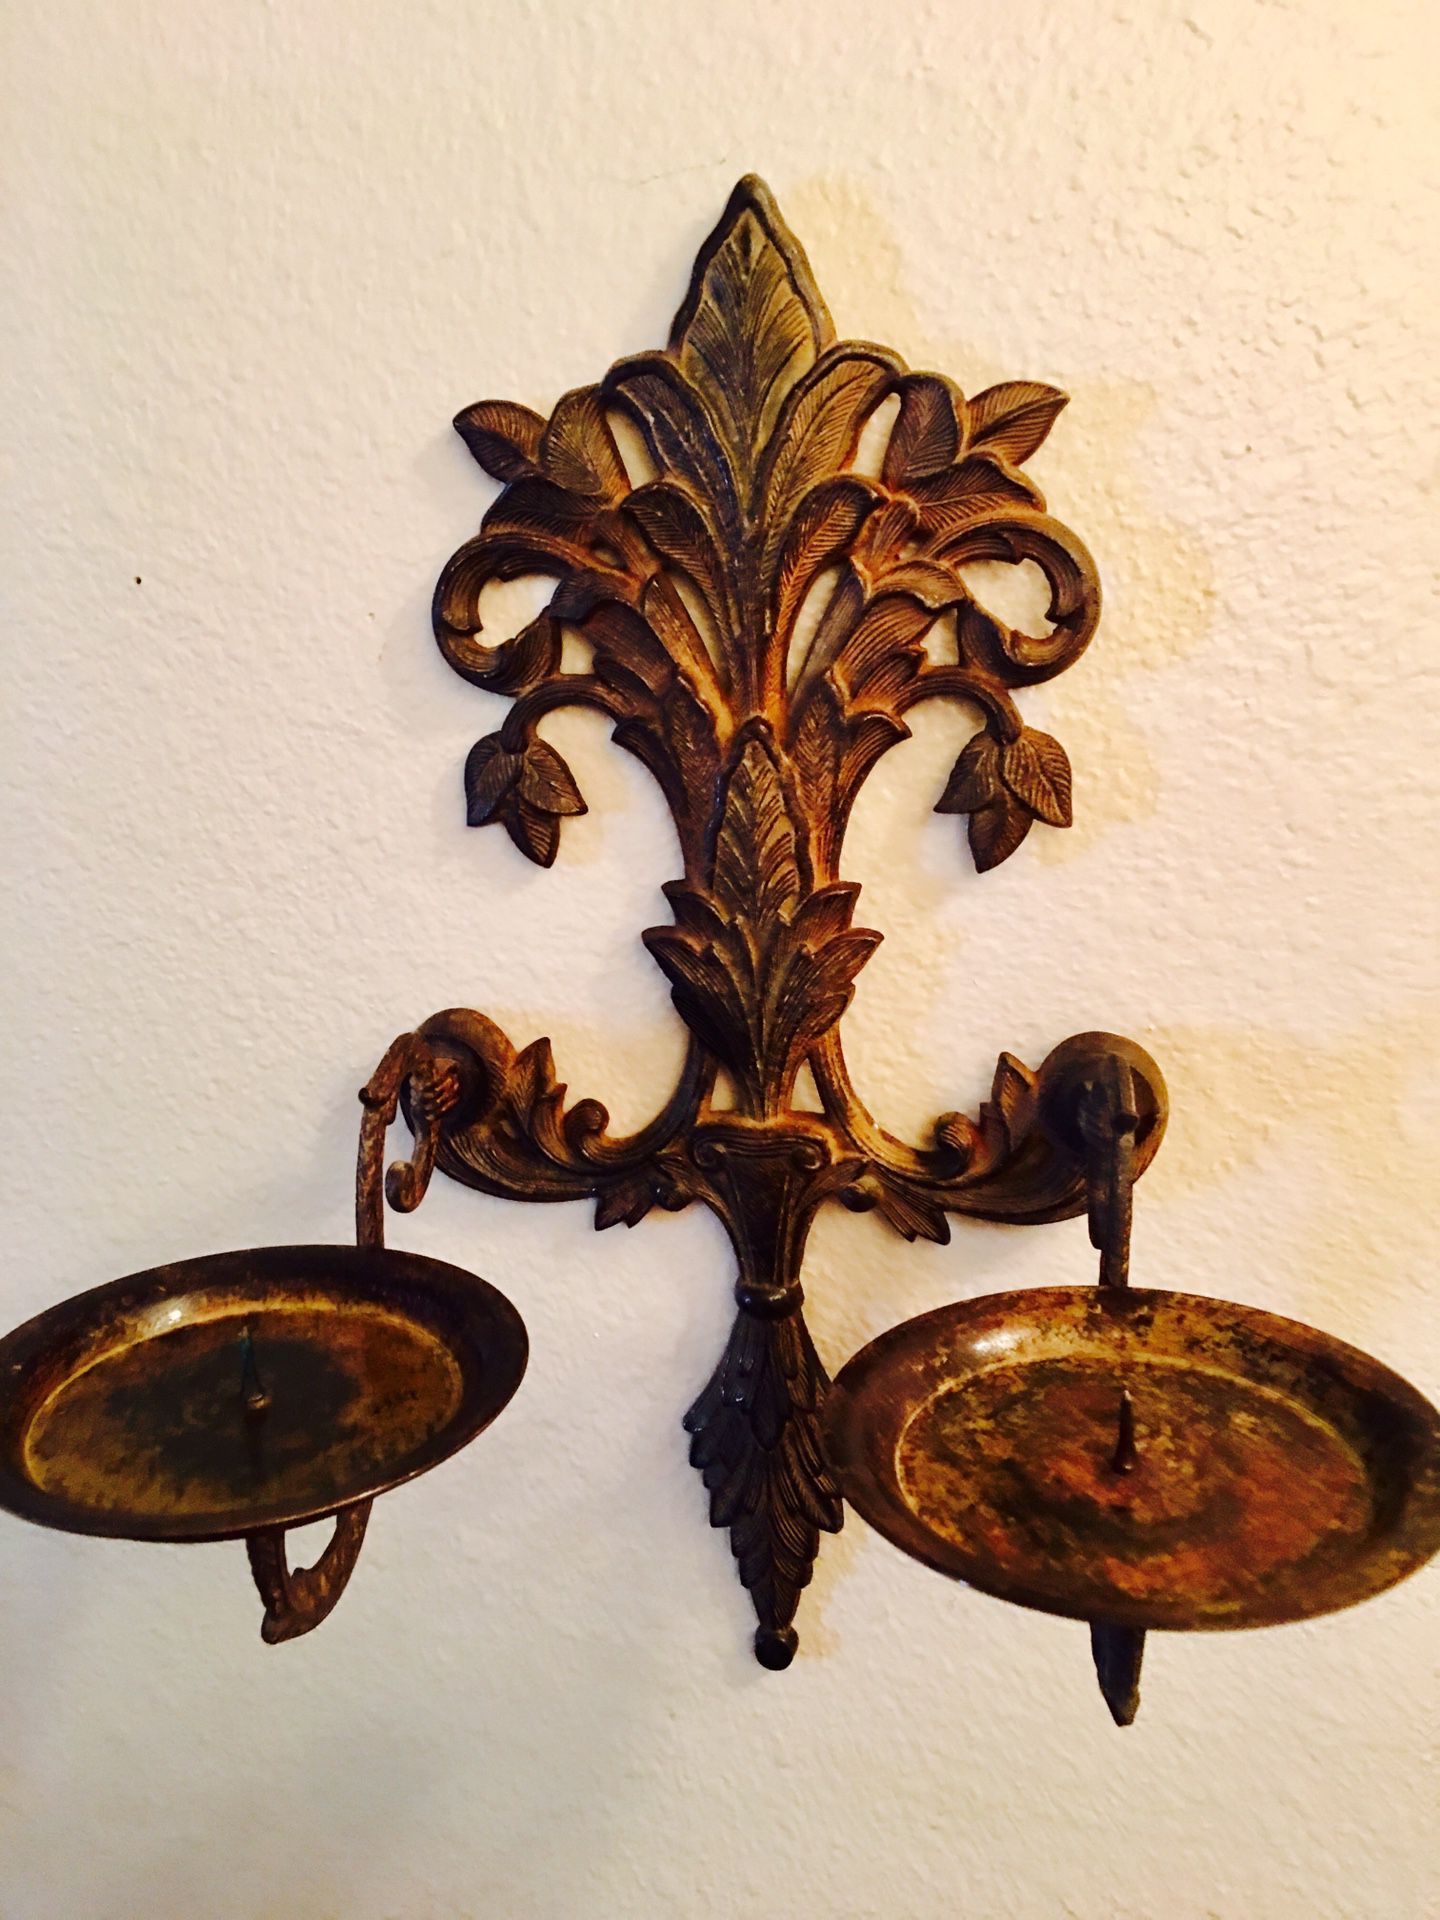 Ornate Iron wall mounted Candle Holder